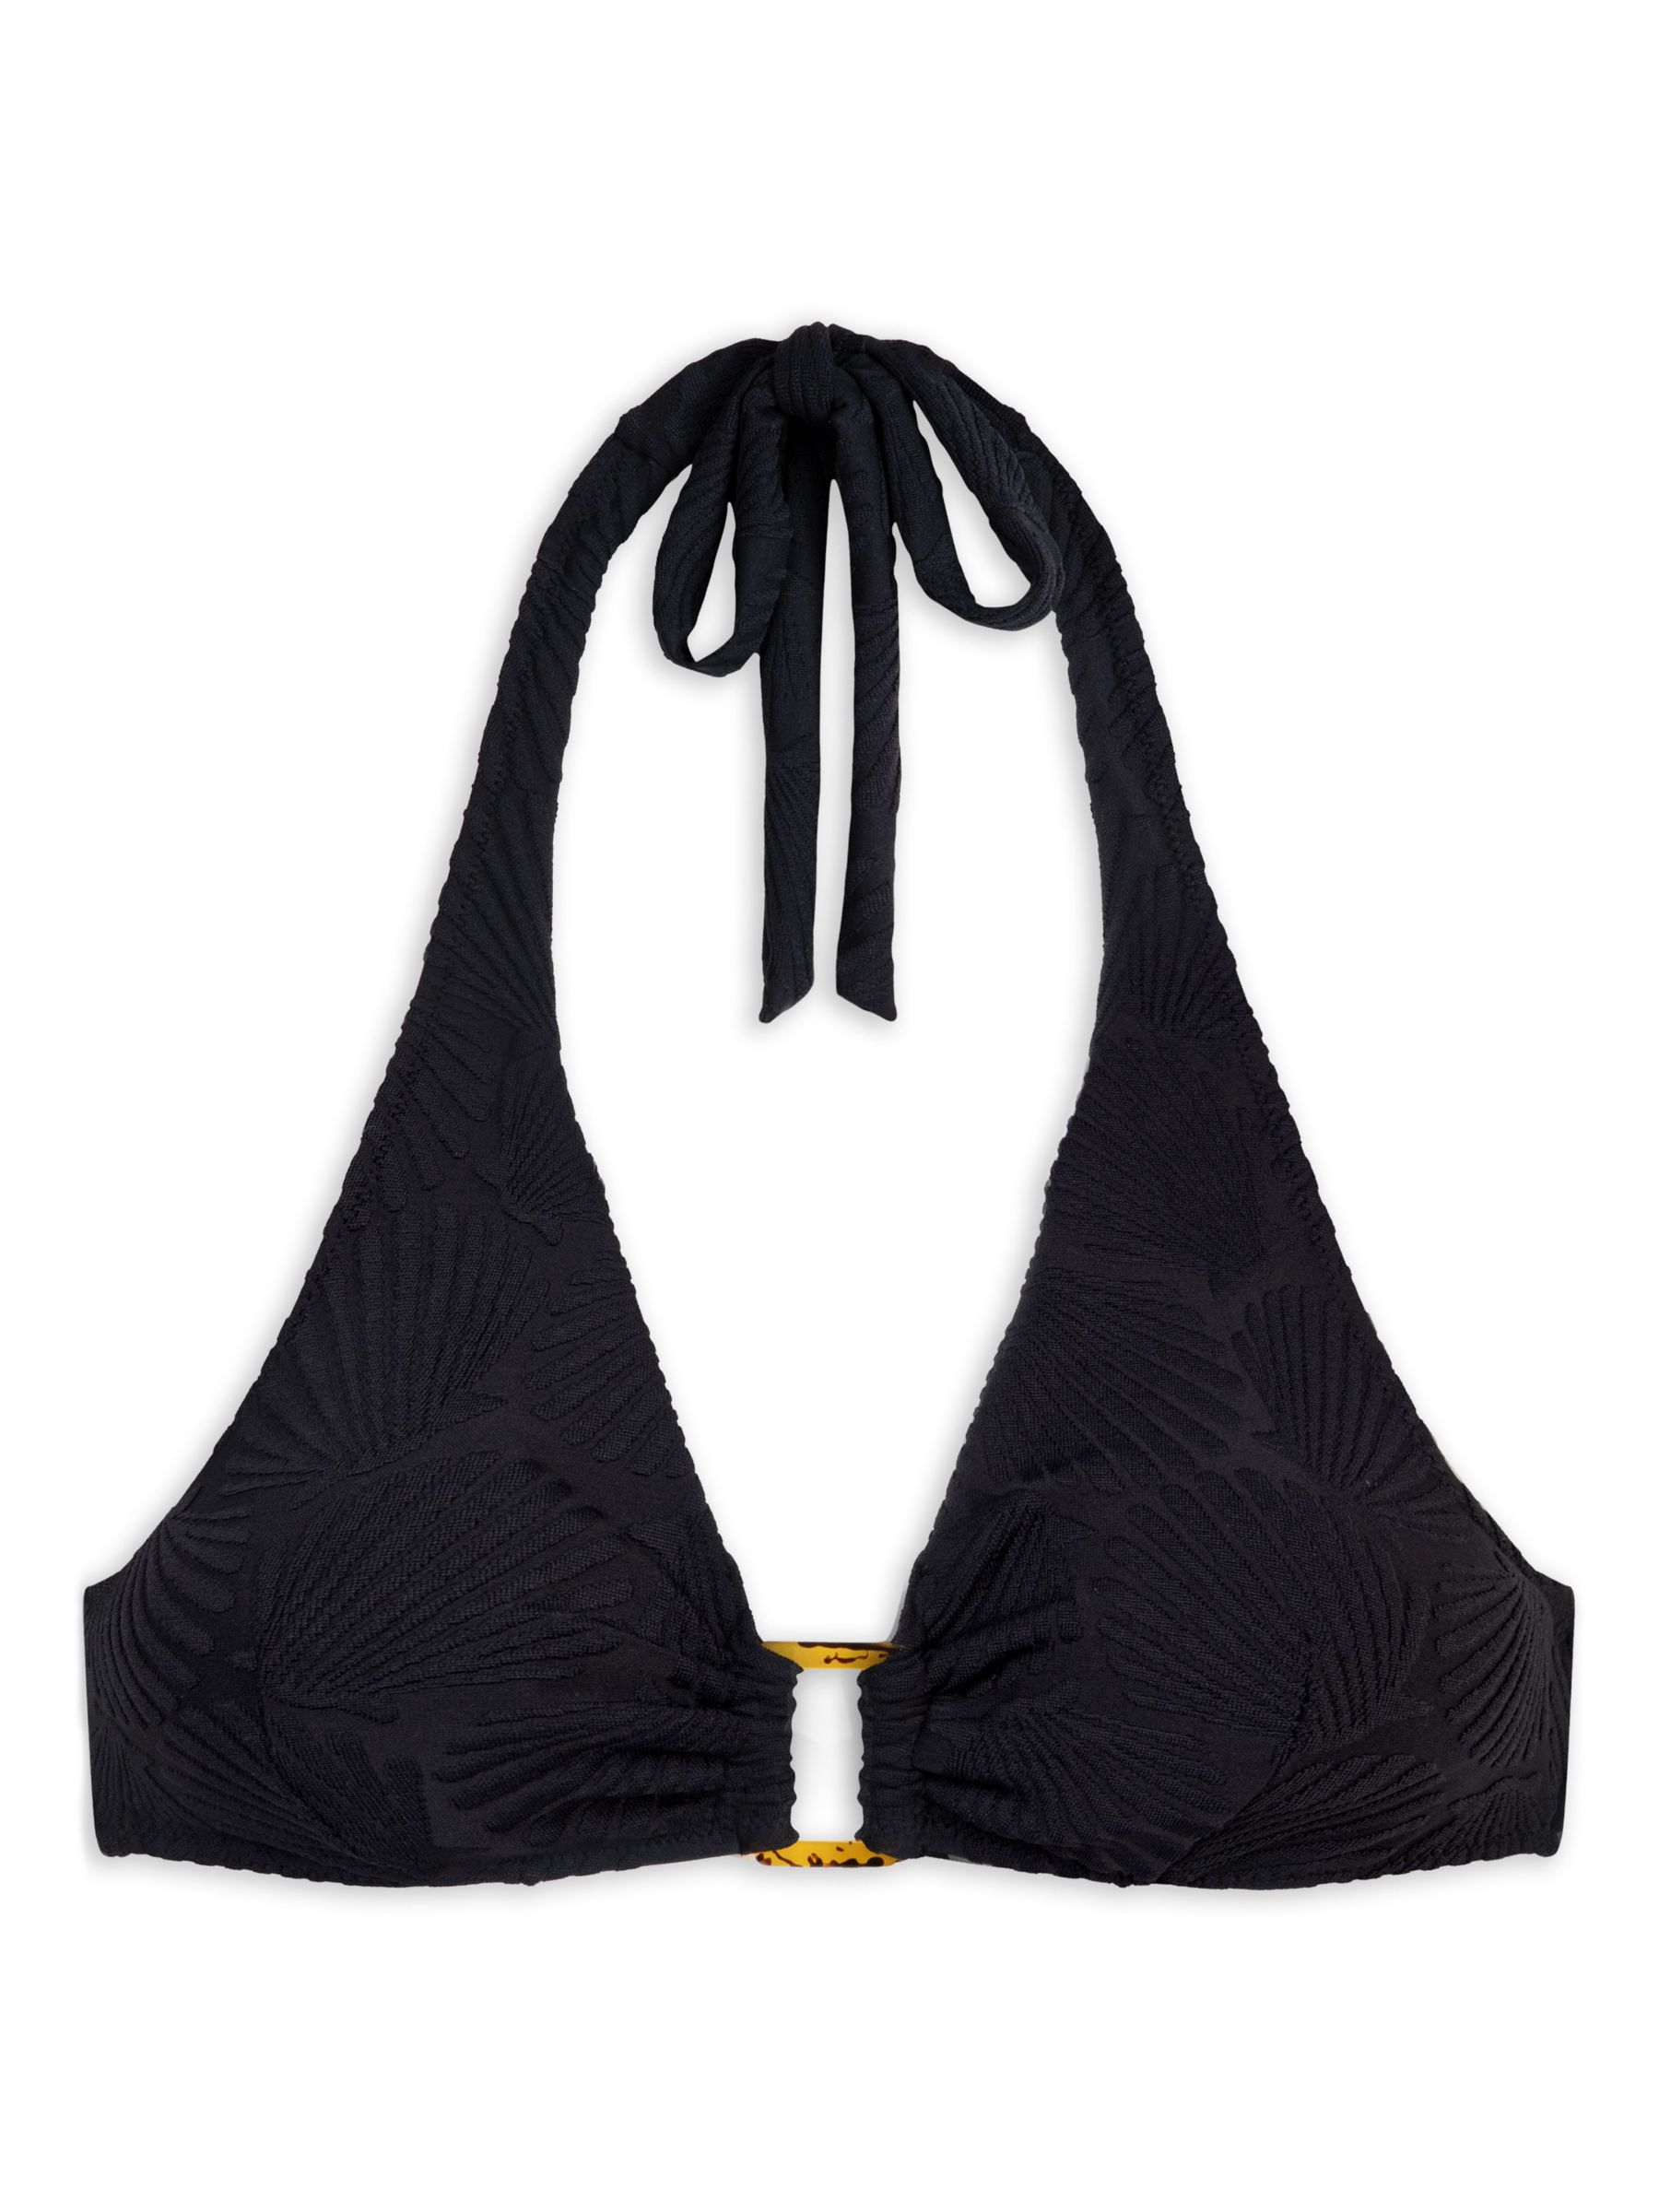 Buy Chelsea Peers Jacquard Shell Halterneck Bikini Top, Black Online at johnlewis.com